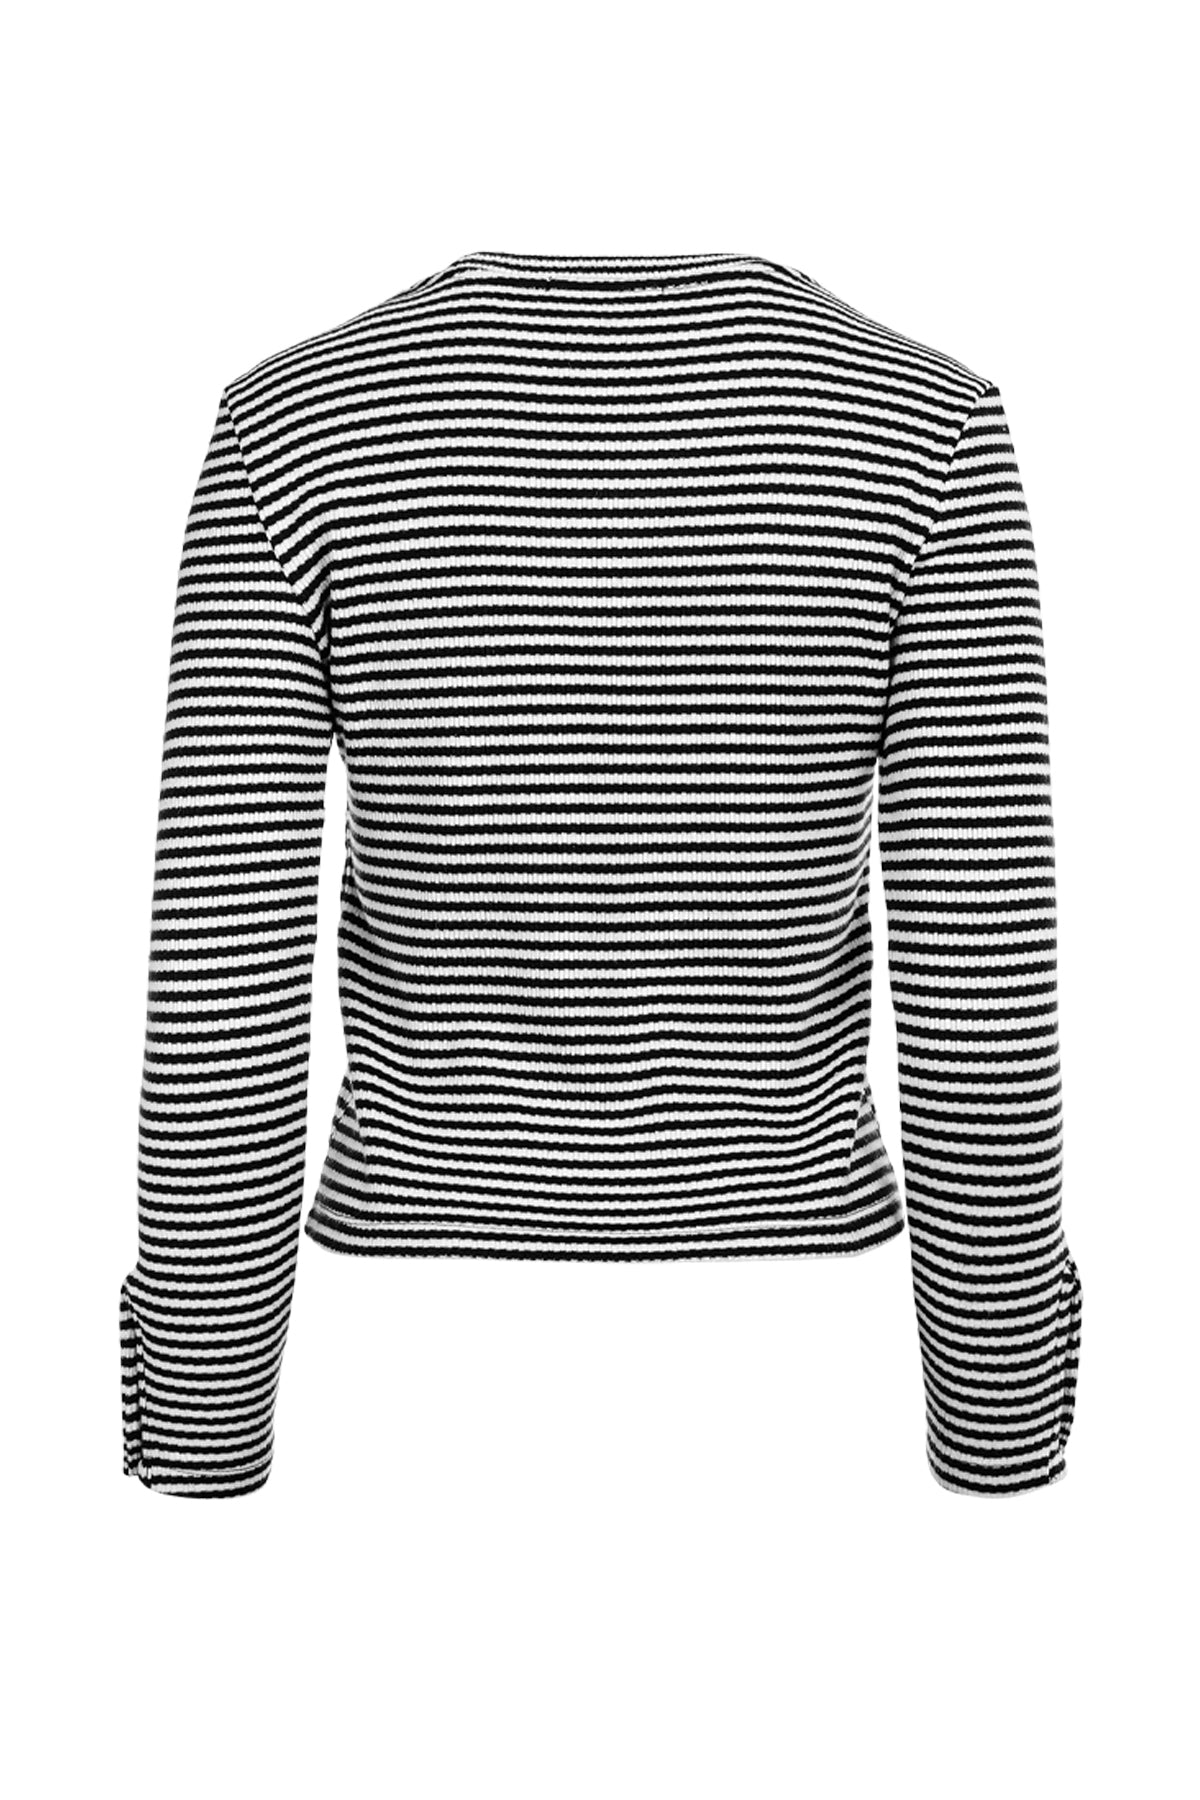 Striped Knit Top - Black